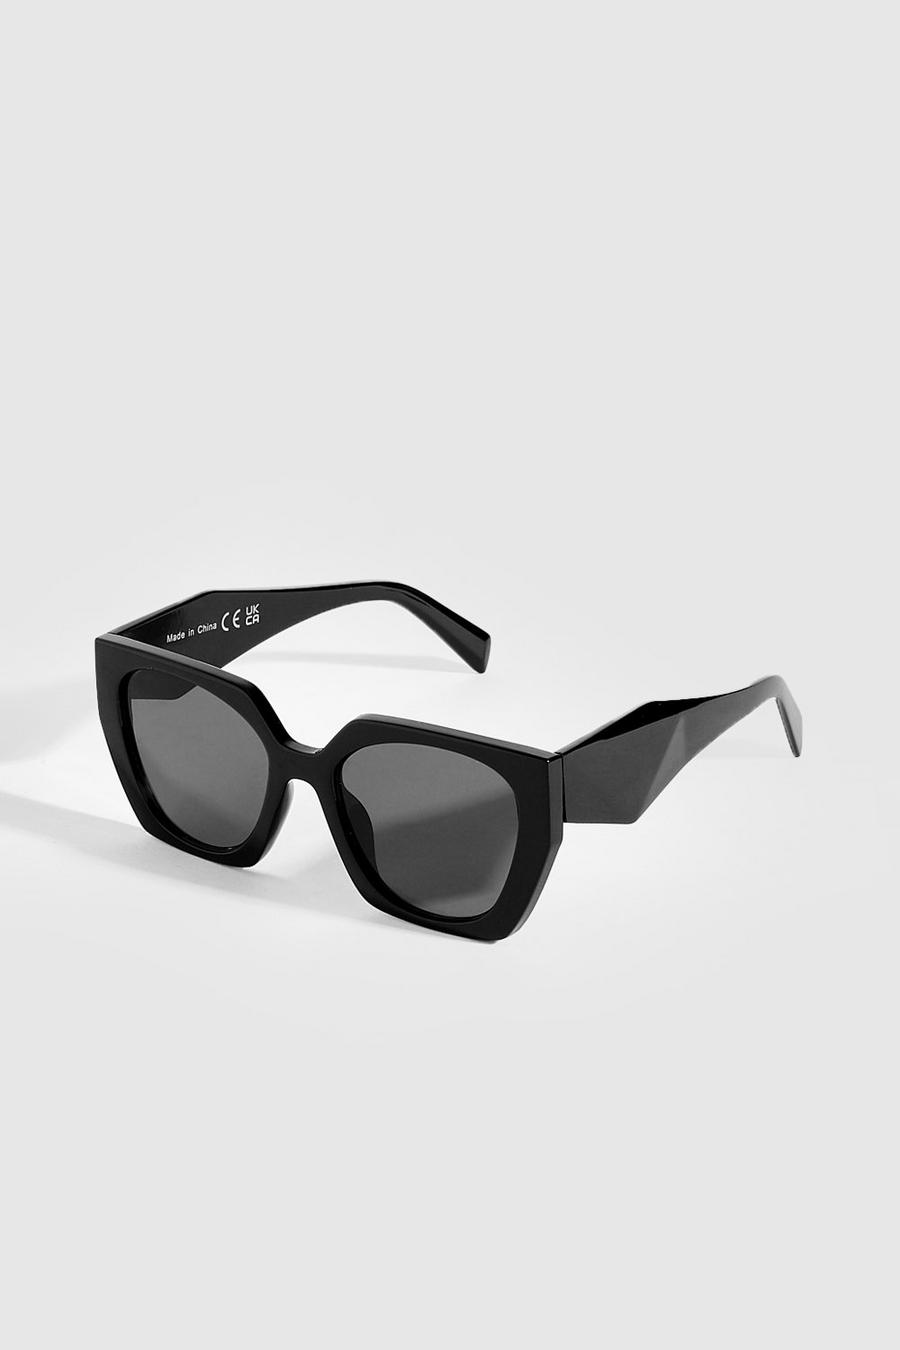 Oversized Angular Black Sunglasses